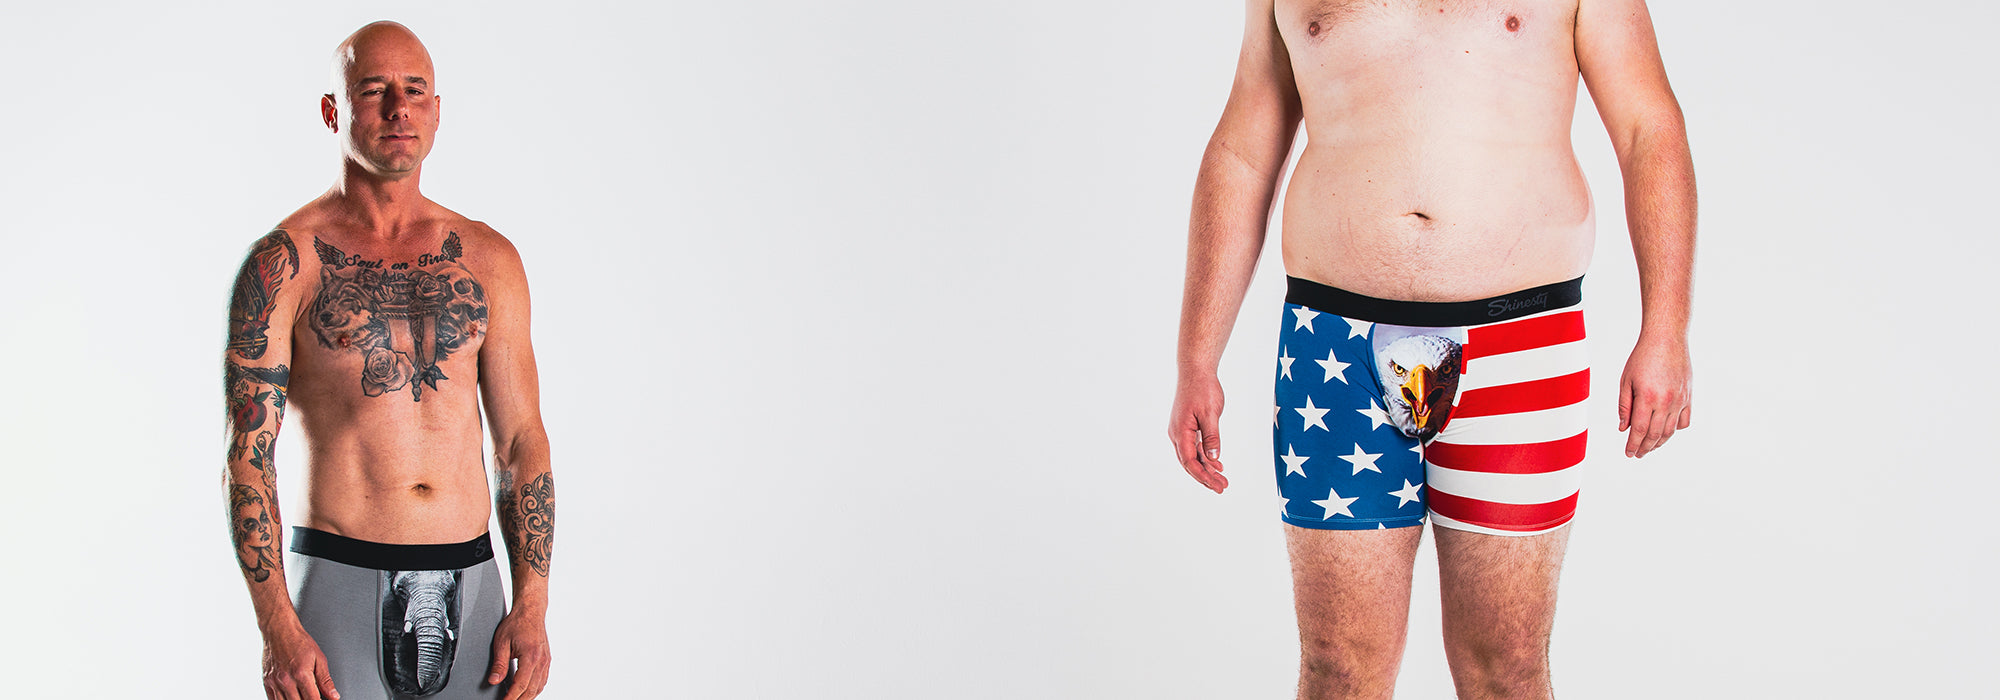 The Mascot - Shinesty American Flag Ball Hammock Pouch Underwear 3X